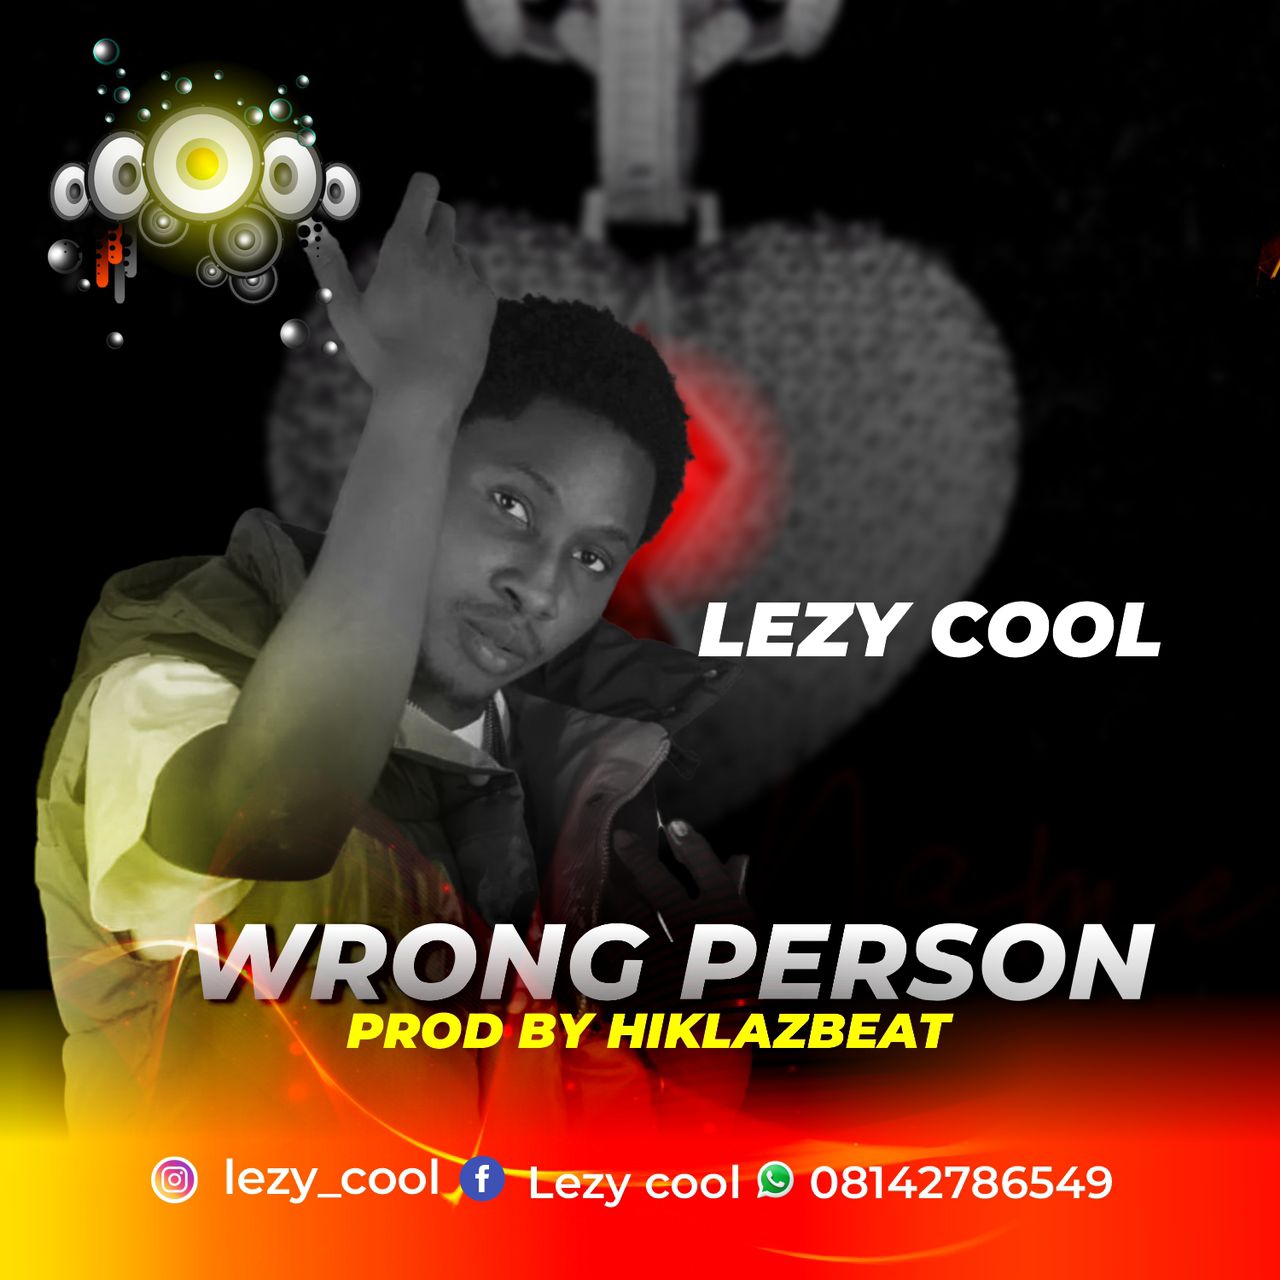 Lezycool Wrong Person